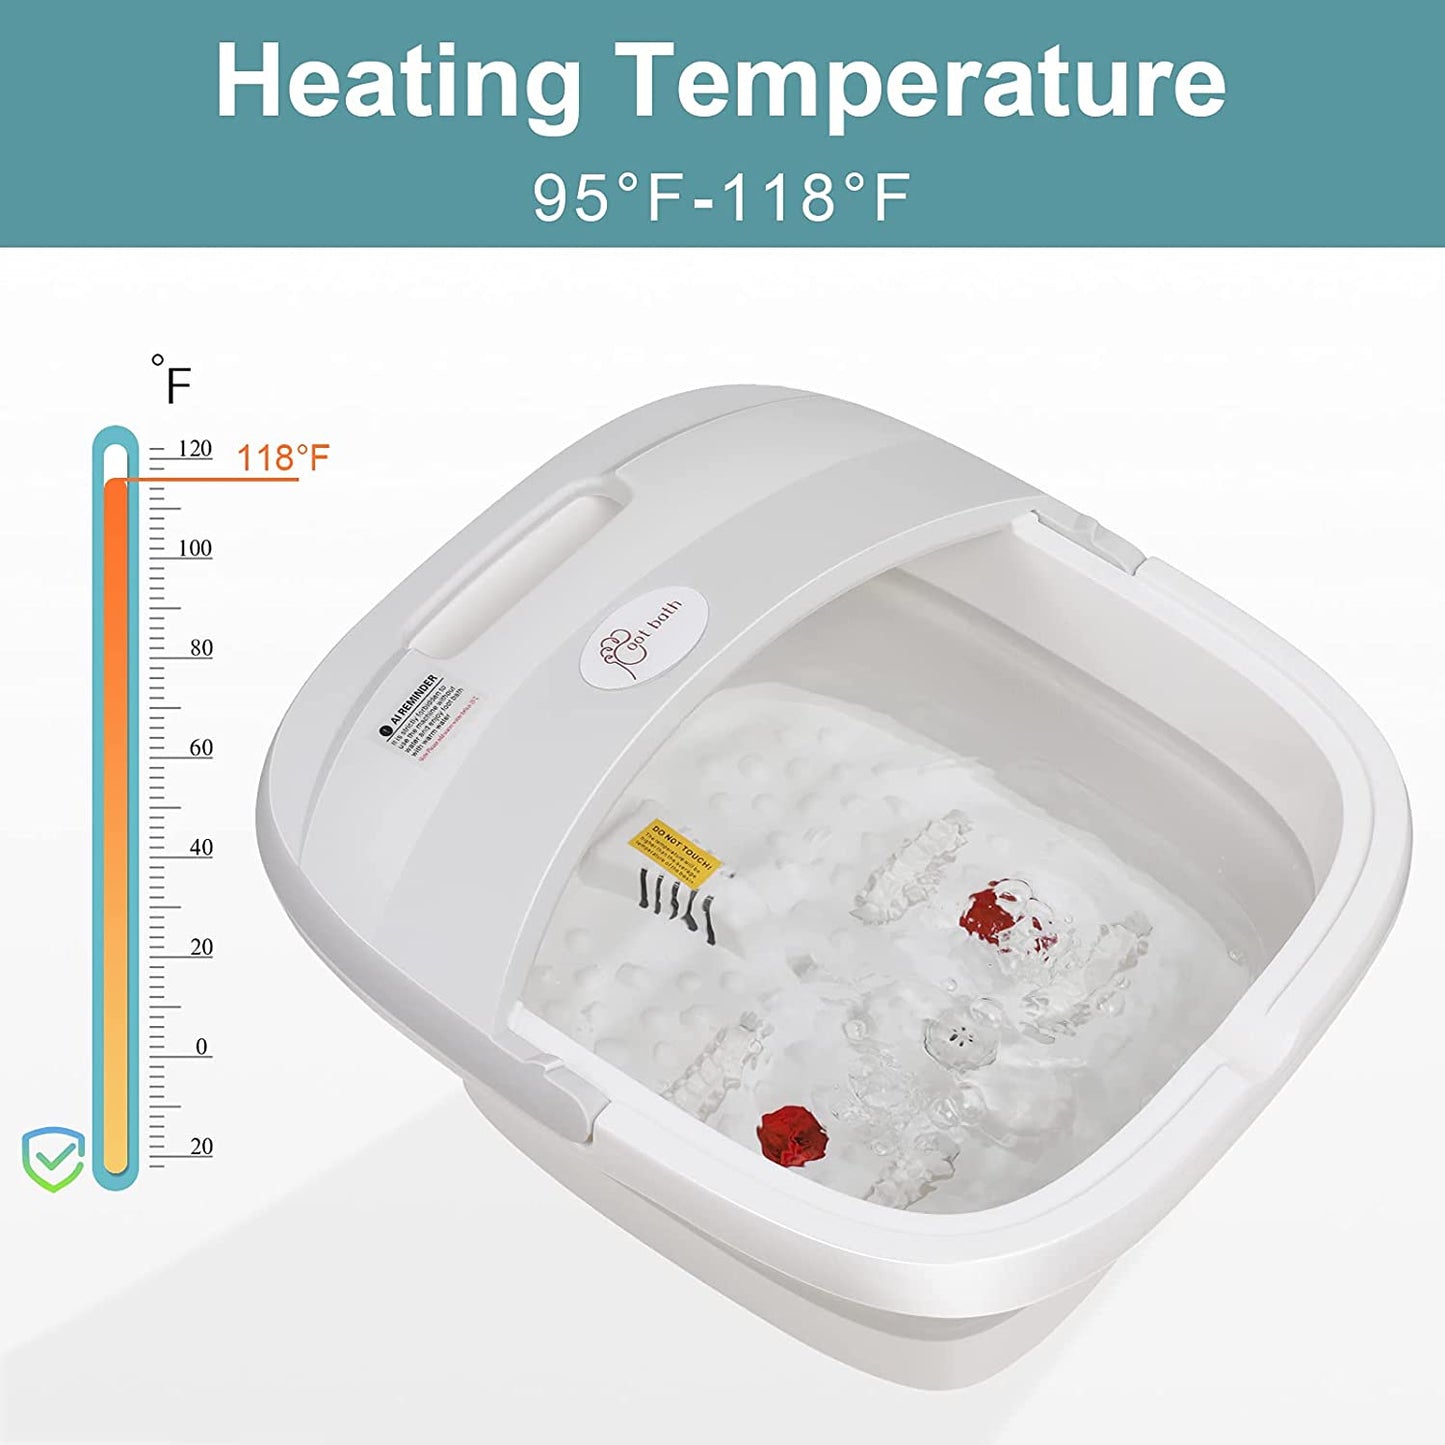 Heated Electric Foot Bath with Heat - ZHOFT